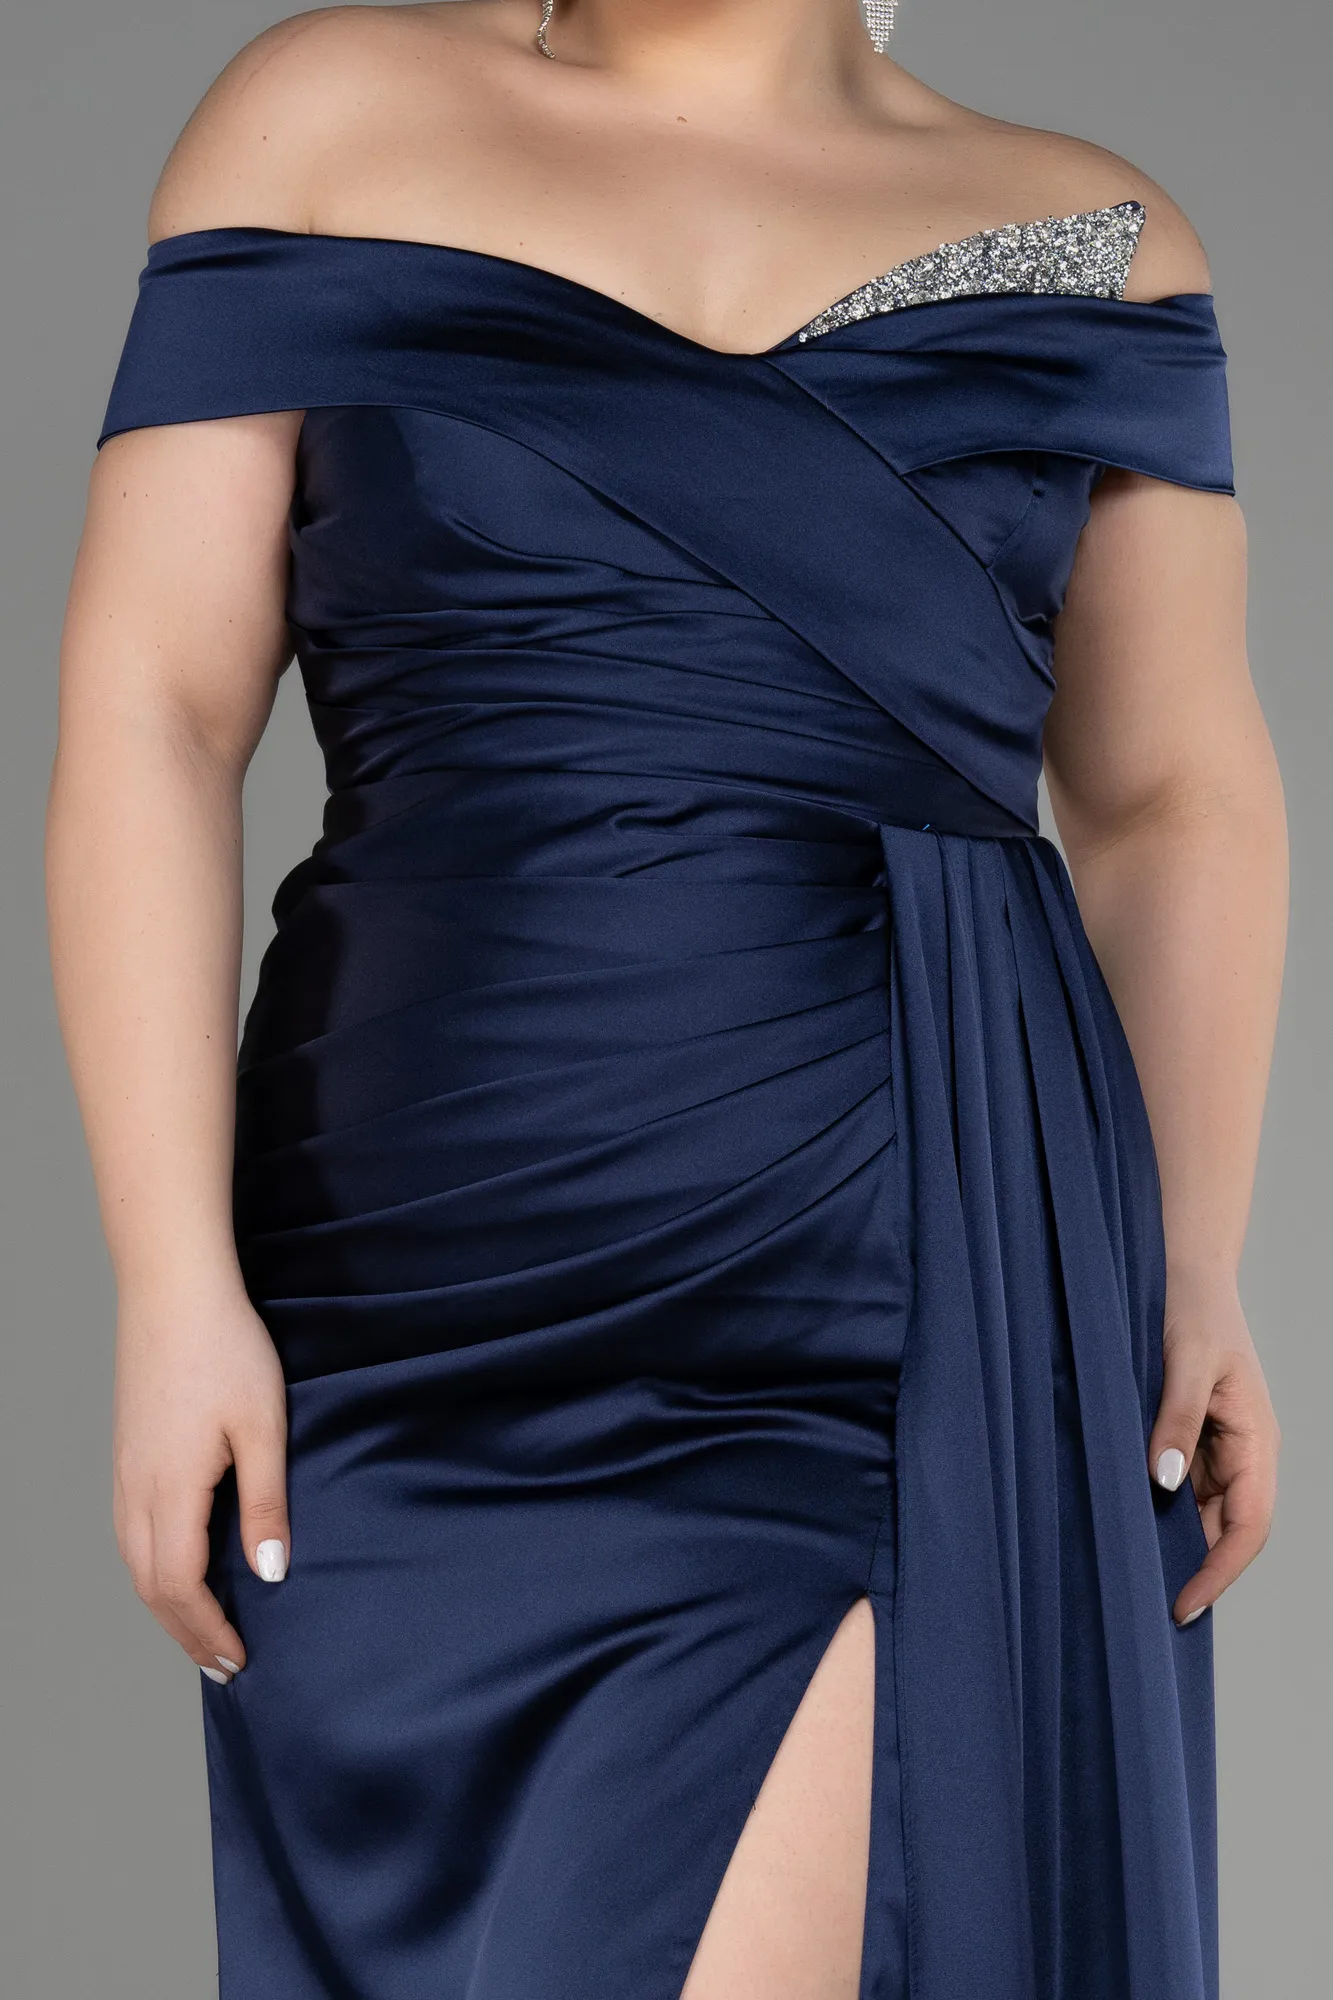 Navy Blue-Long Satin Plus Size Evening Dress ABU2561